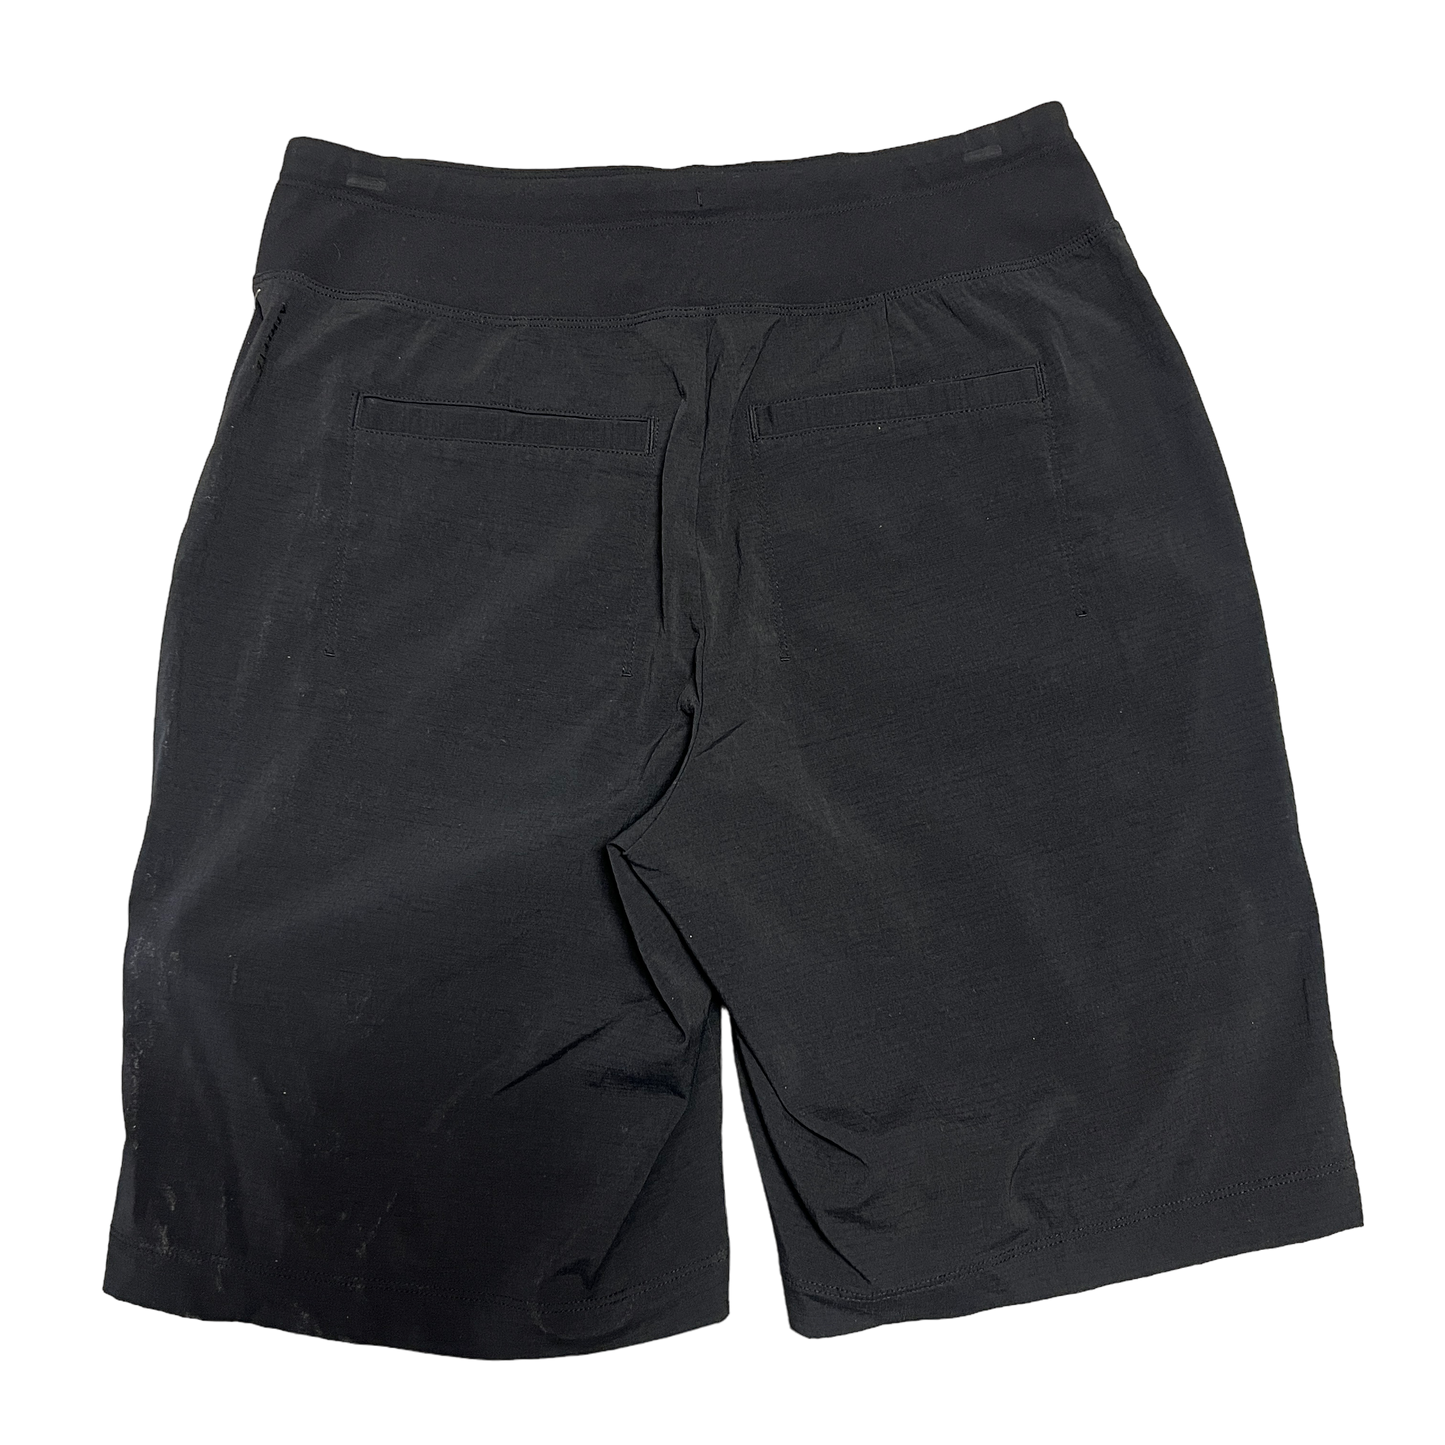 Athletic Shorts By Athleta  Size: 2